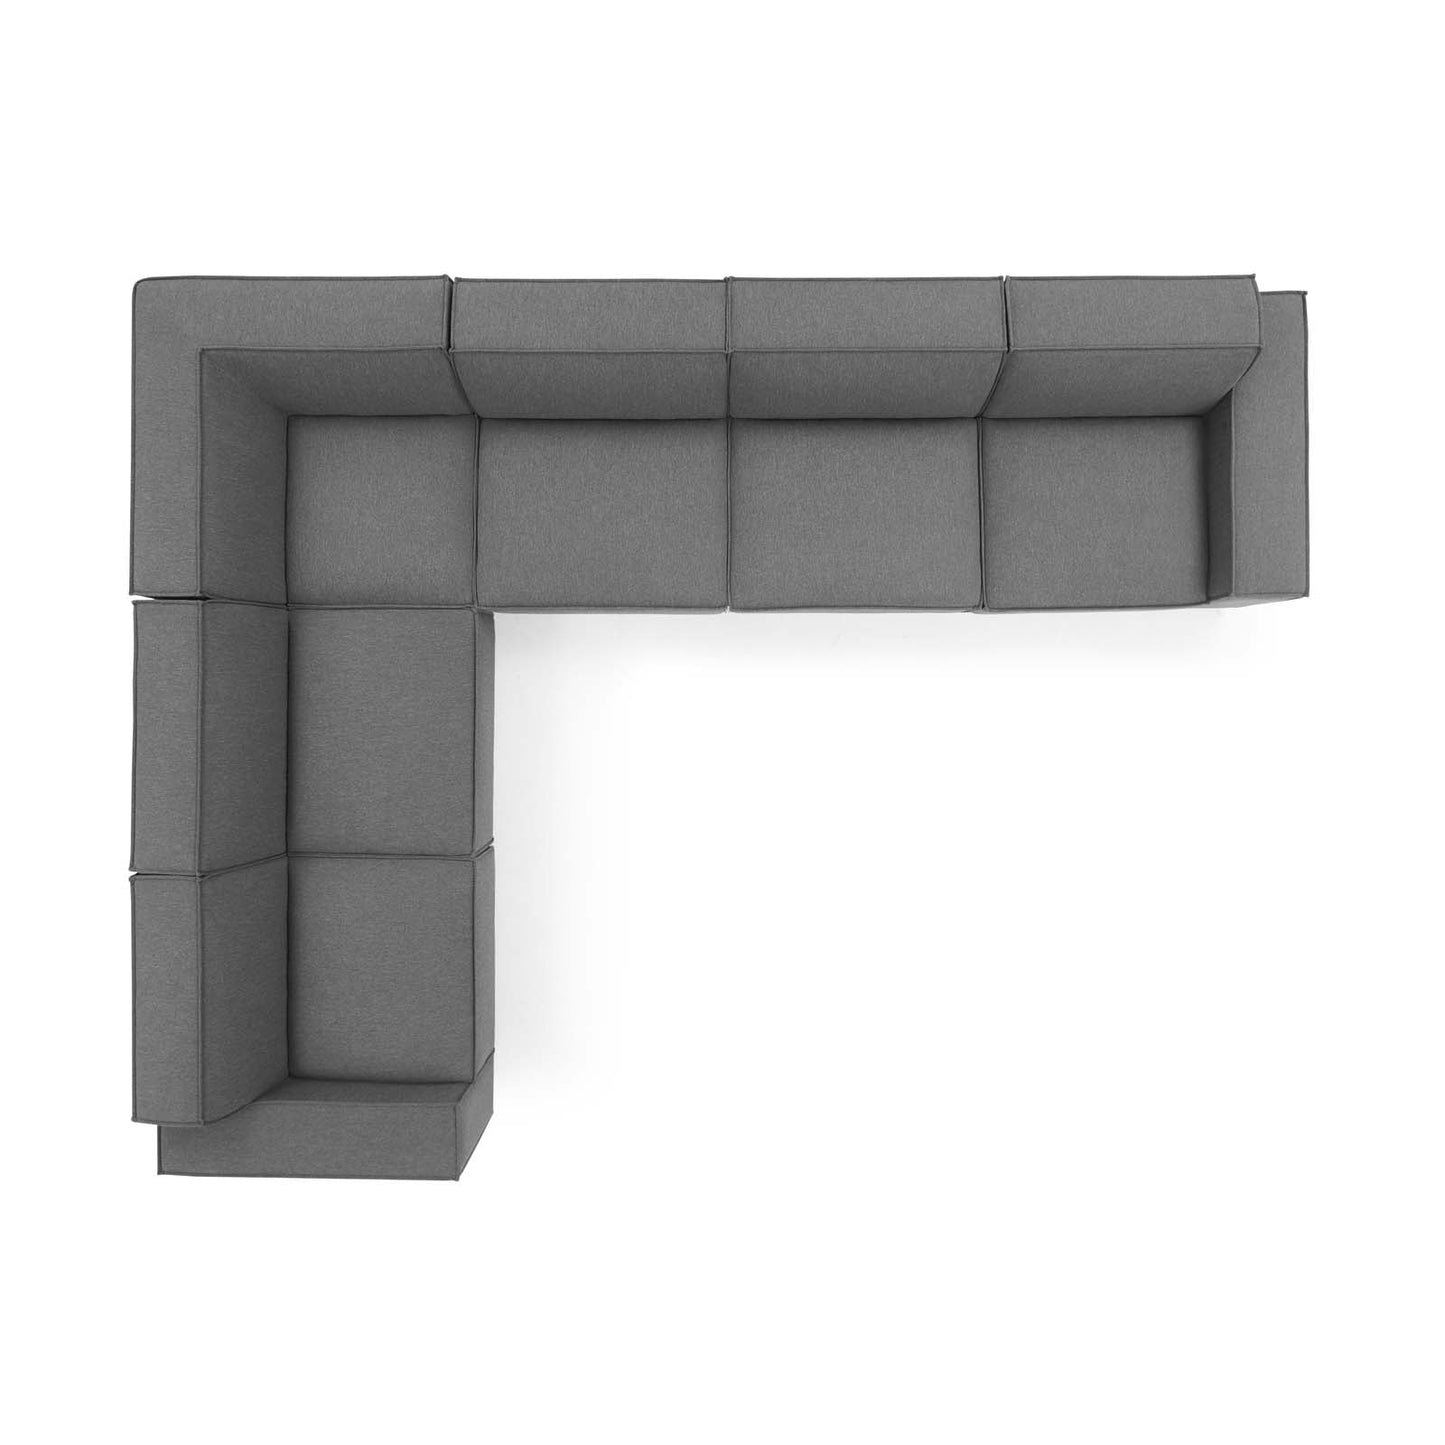 Restore 6-Piece Sectional Sofa Charcoal EEI-4119-CHA